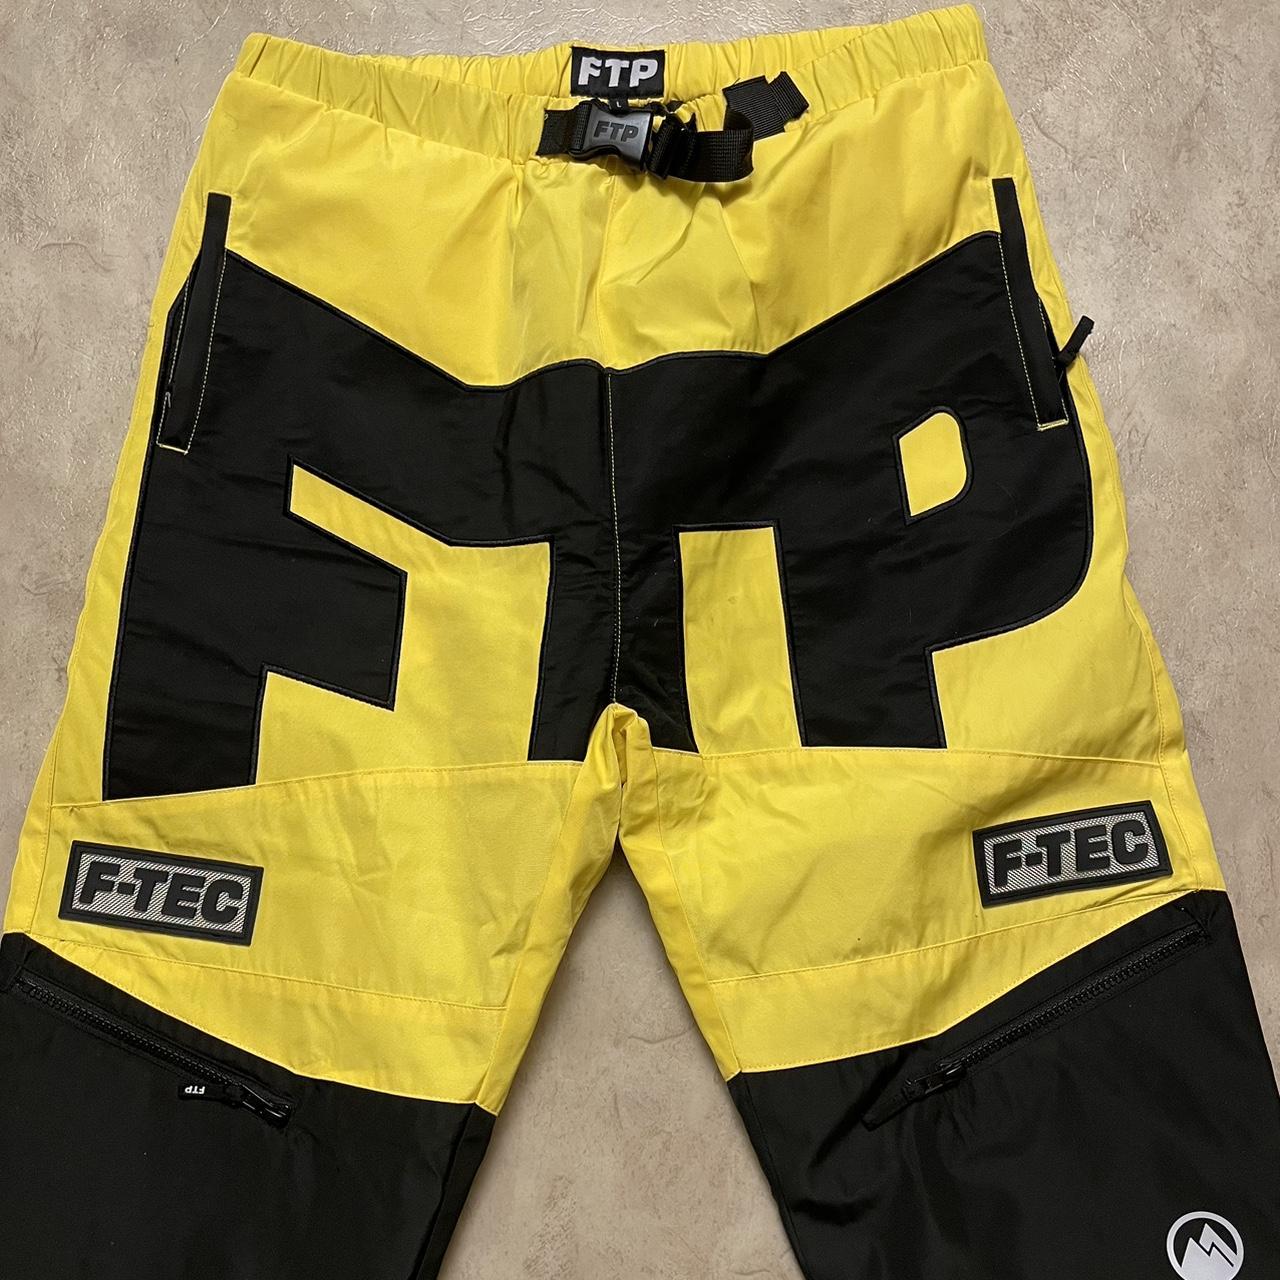 FTP F-Tec Pant Yellow